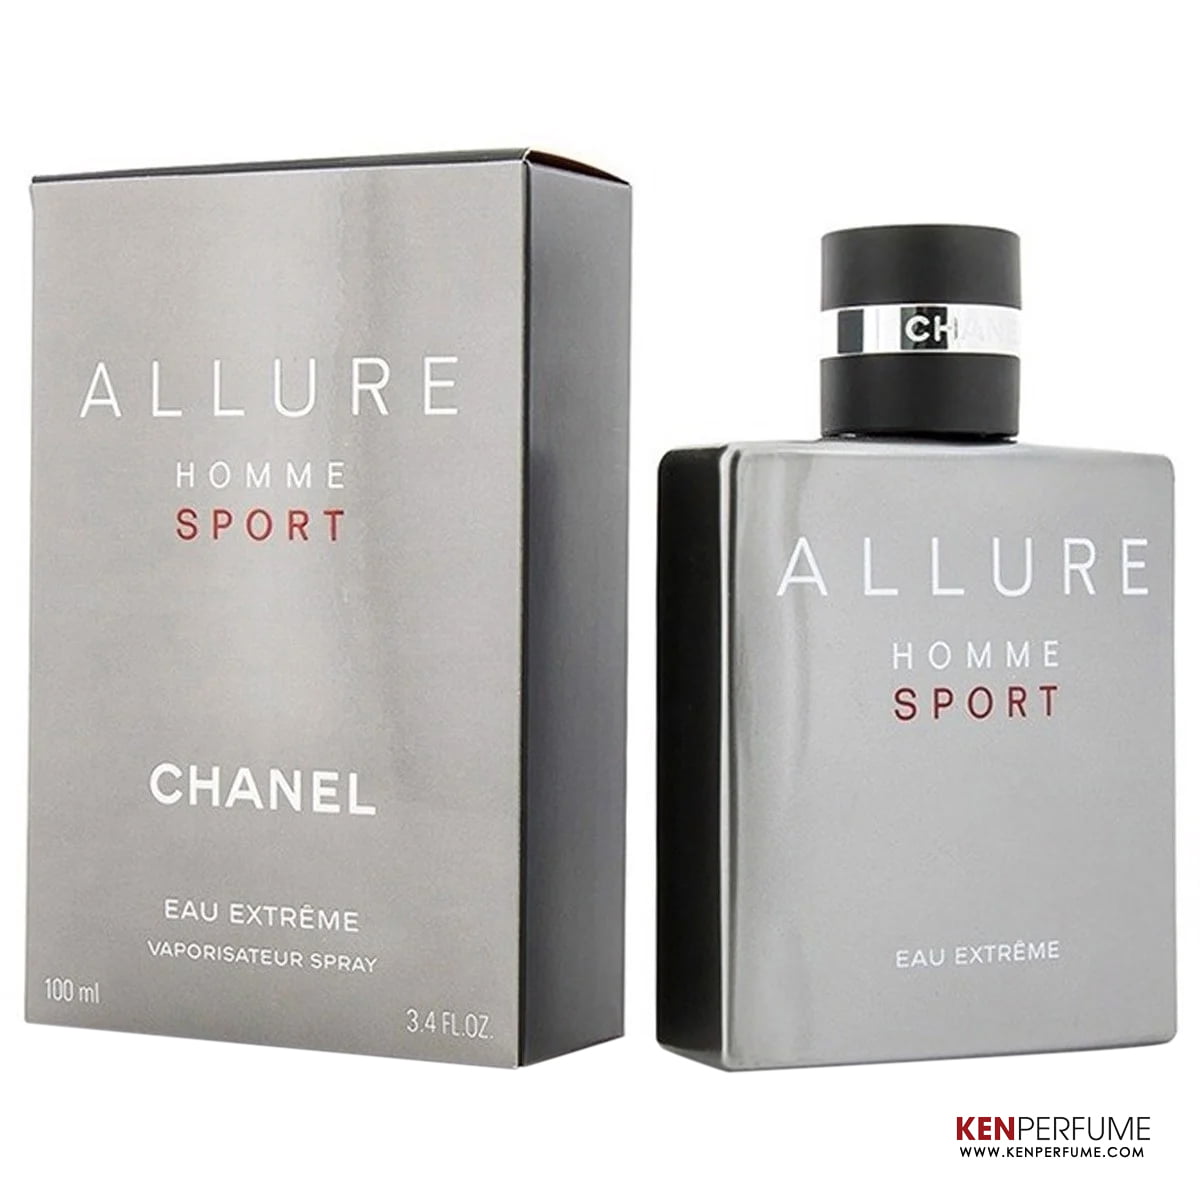 Nước Hoa Nam Chanel Allure Homme Sport Eau Extreme